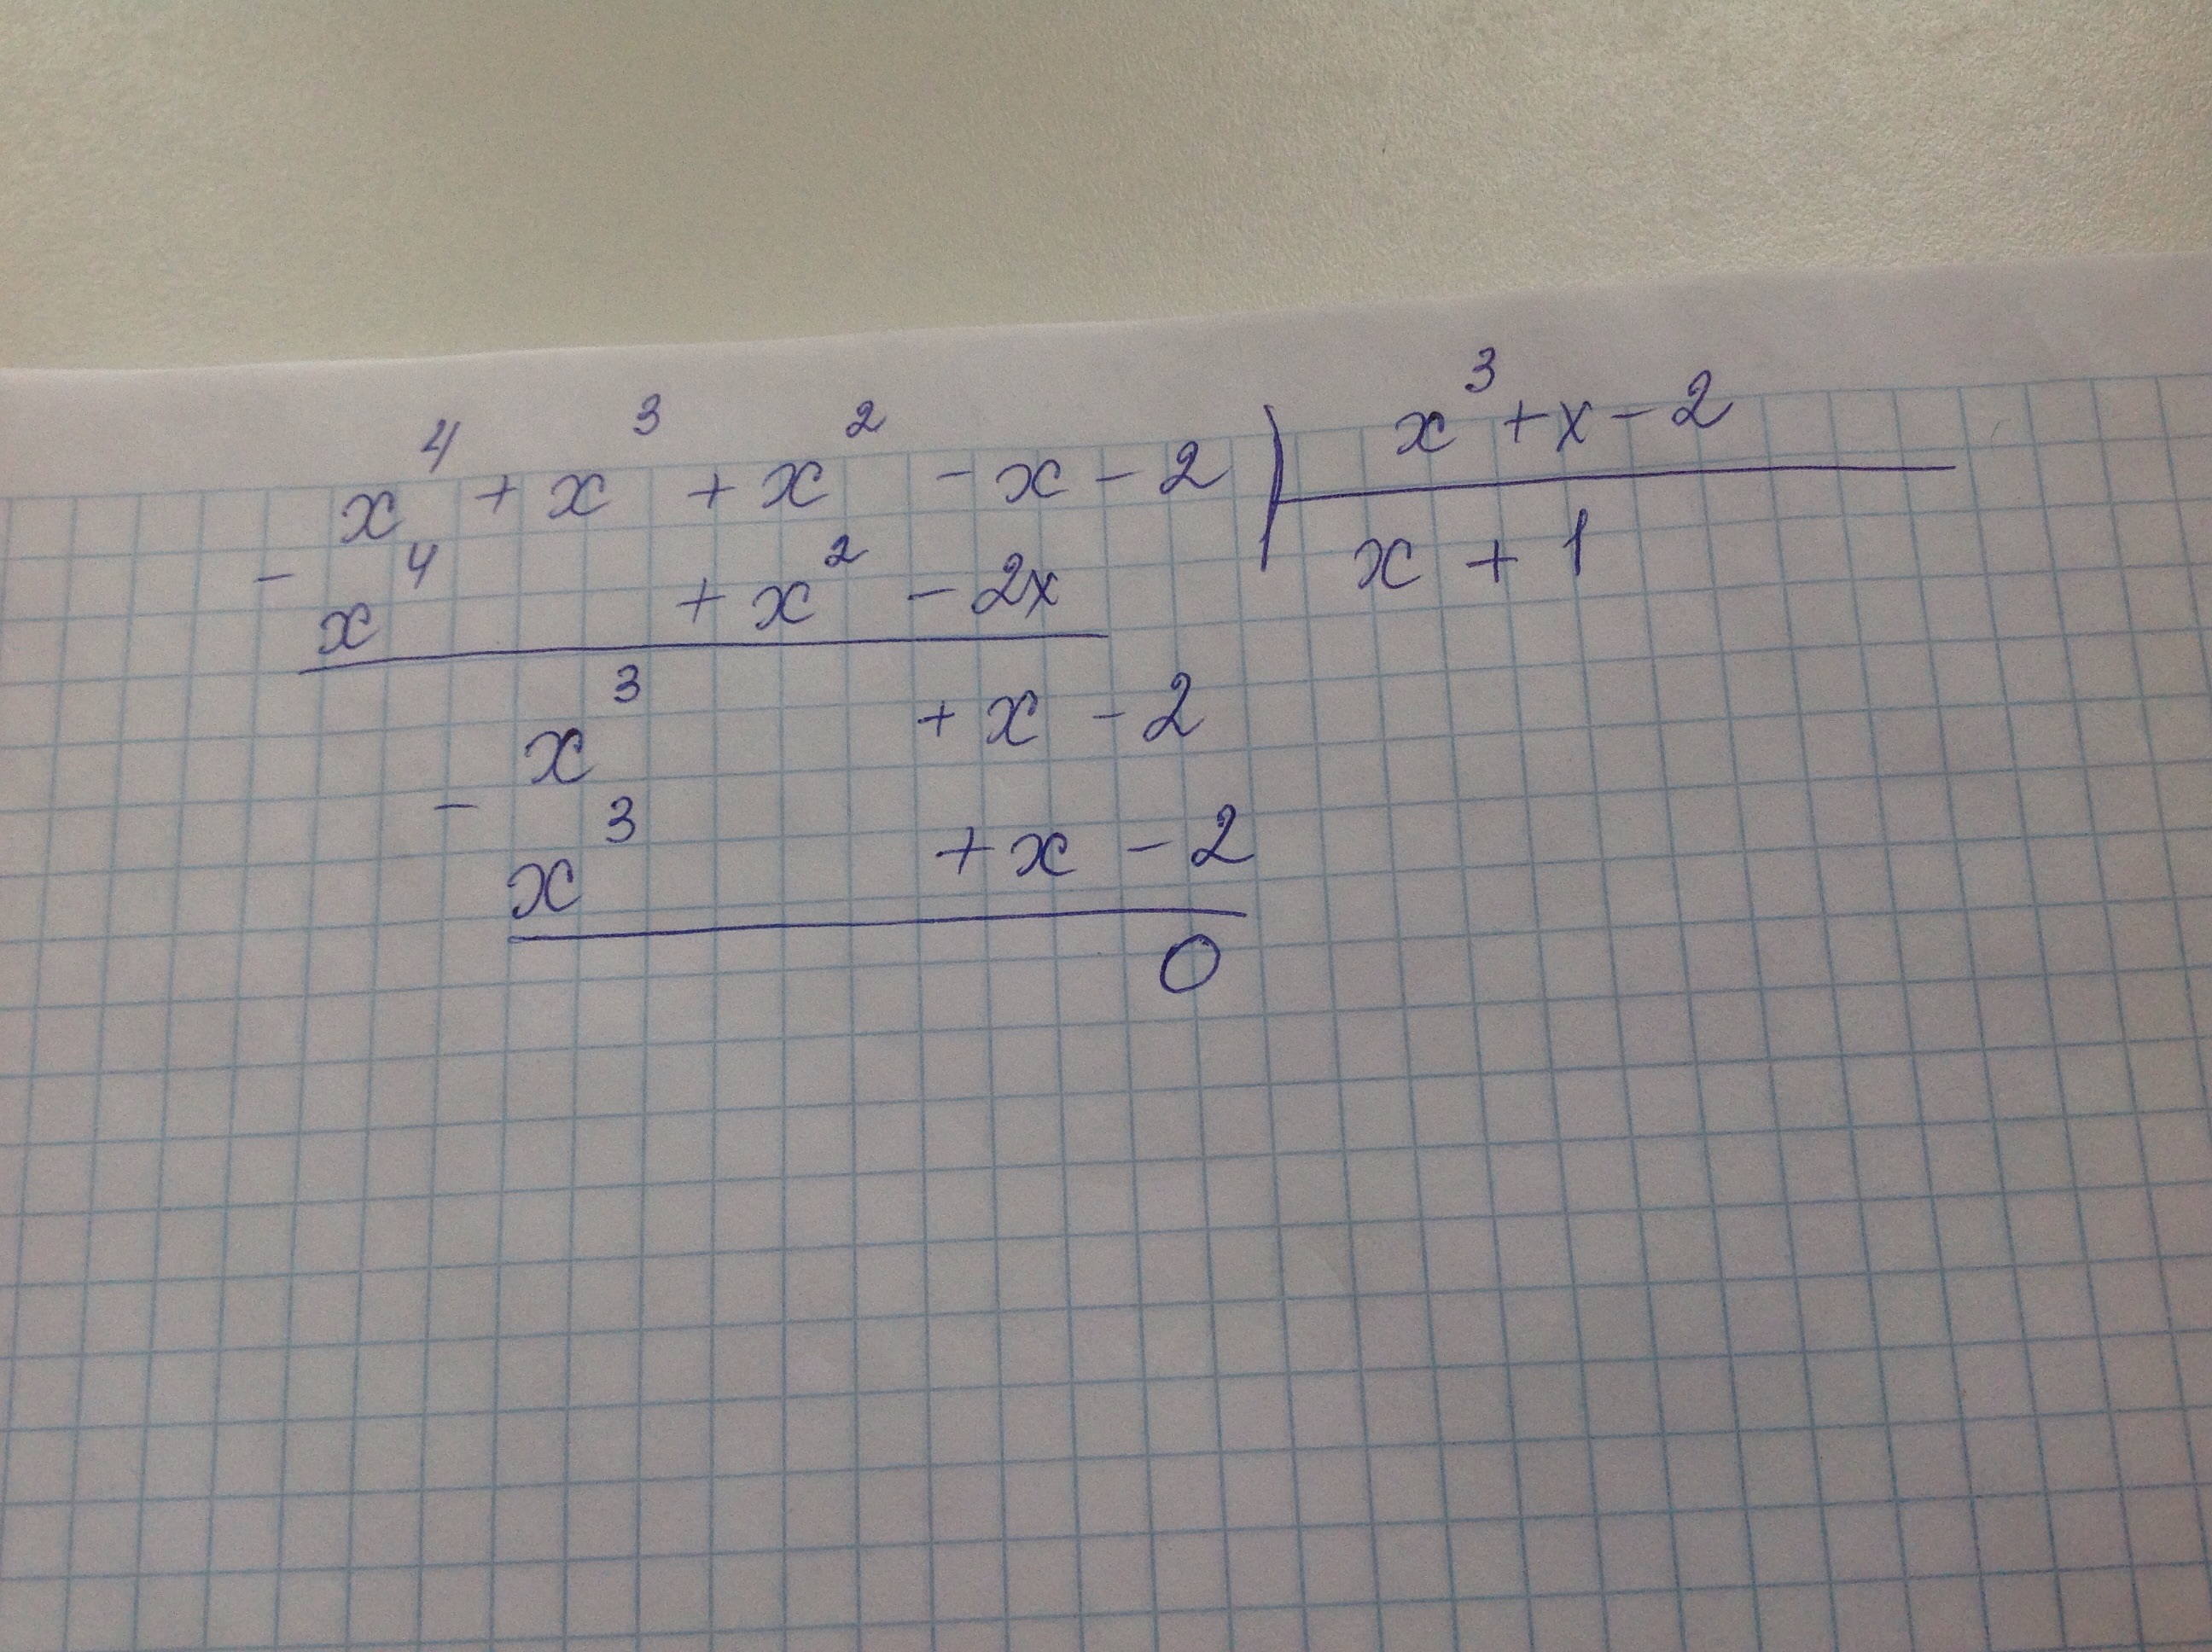 2x 7 4x 3 18 x. Разделите уголком 3x3-2x2+7x-4. Разделить многочлен 2x4-3x3-x2-+4x. 2x 2 4x 4 x 2 5x -3 x 2. Выполнить деление многочленов: (2 x 4+2 x3−5 x2−2 ) : (x2+ x−2 ).